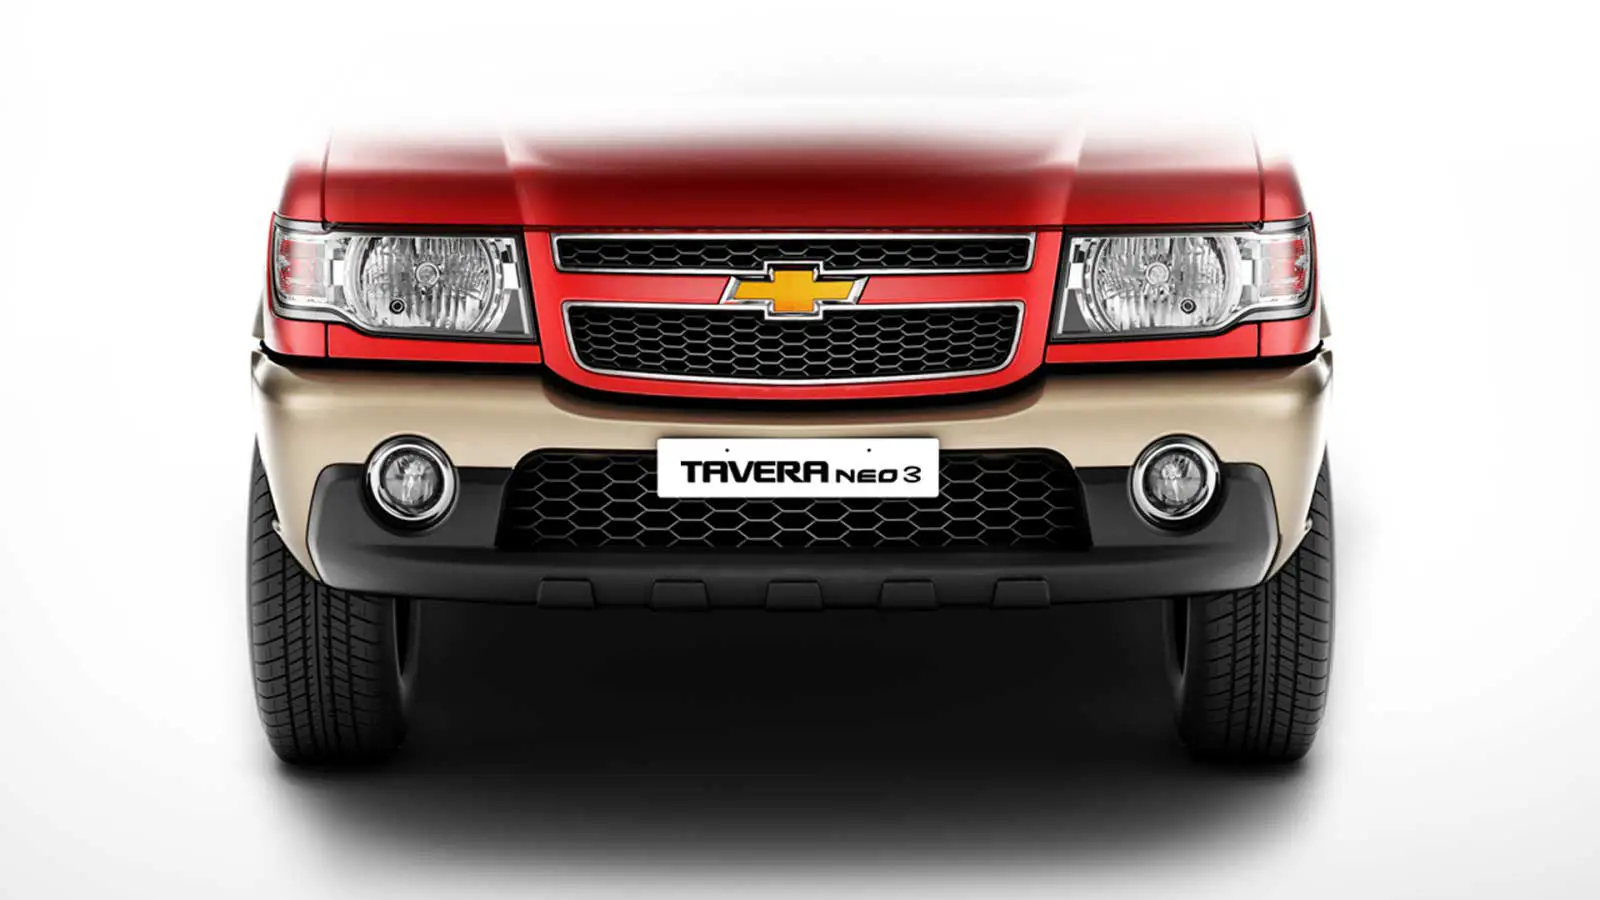 Chevrolet Tavera Neo 3 LT 8 STR BSIII Exterior front view